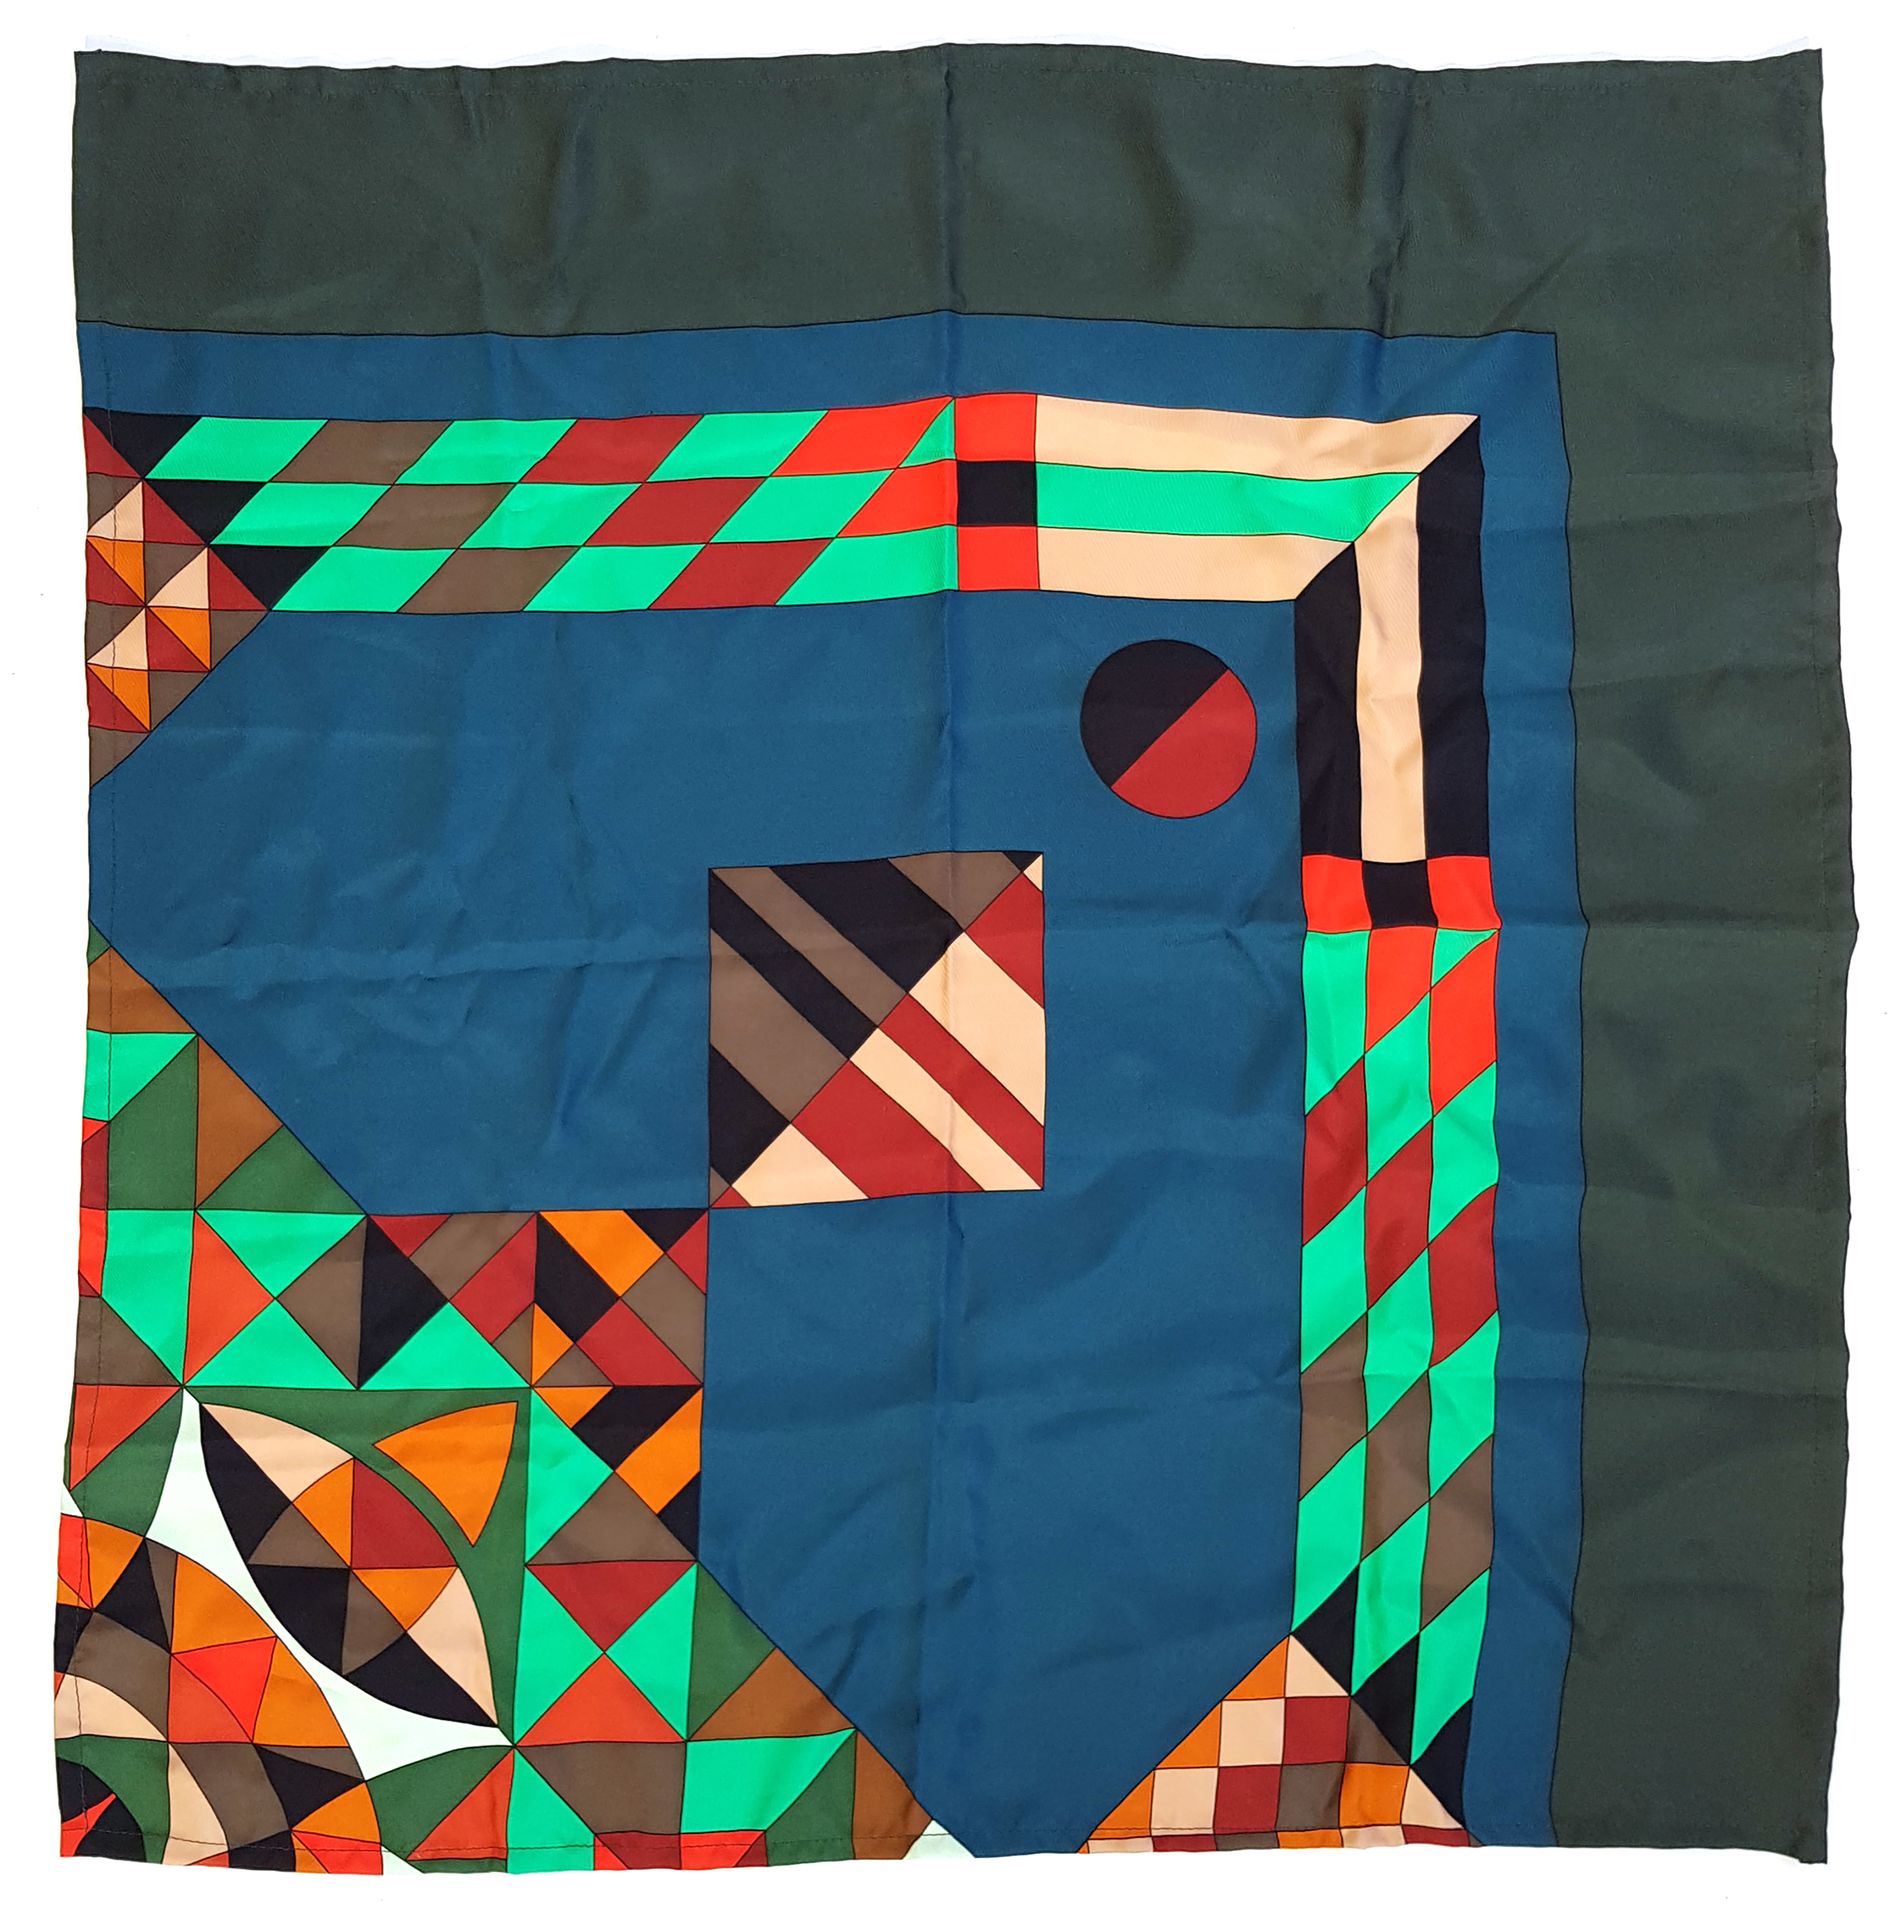 Null HERMÈS

带有现代主义图案的丝绸方块及其小袋

63,5 x 65,5 cm